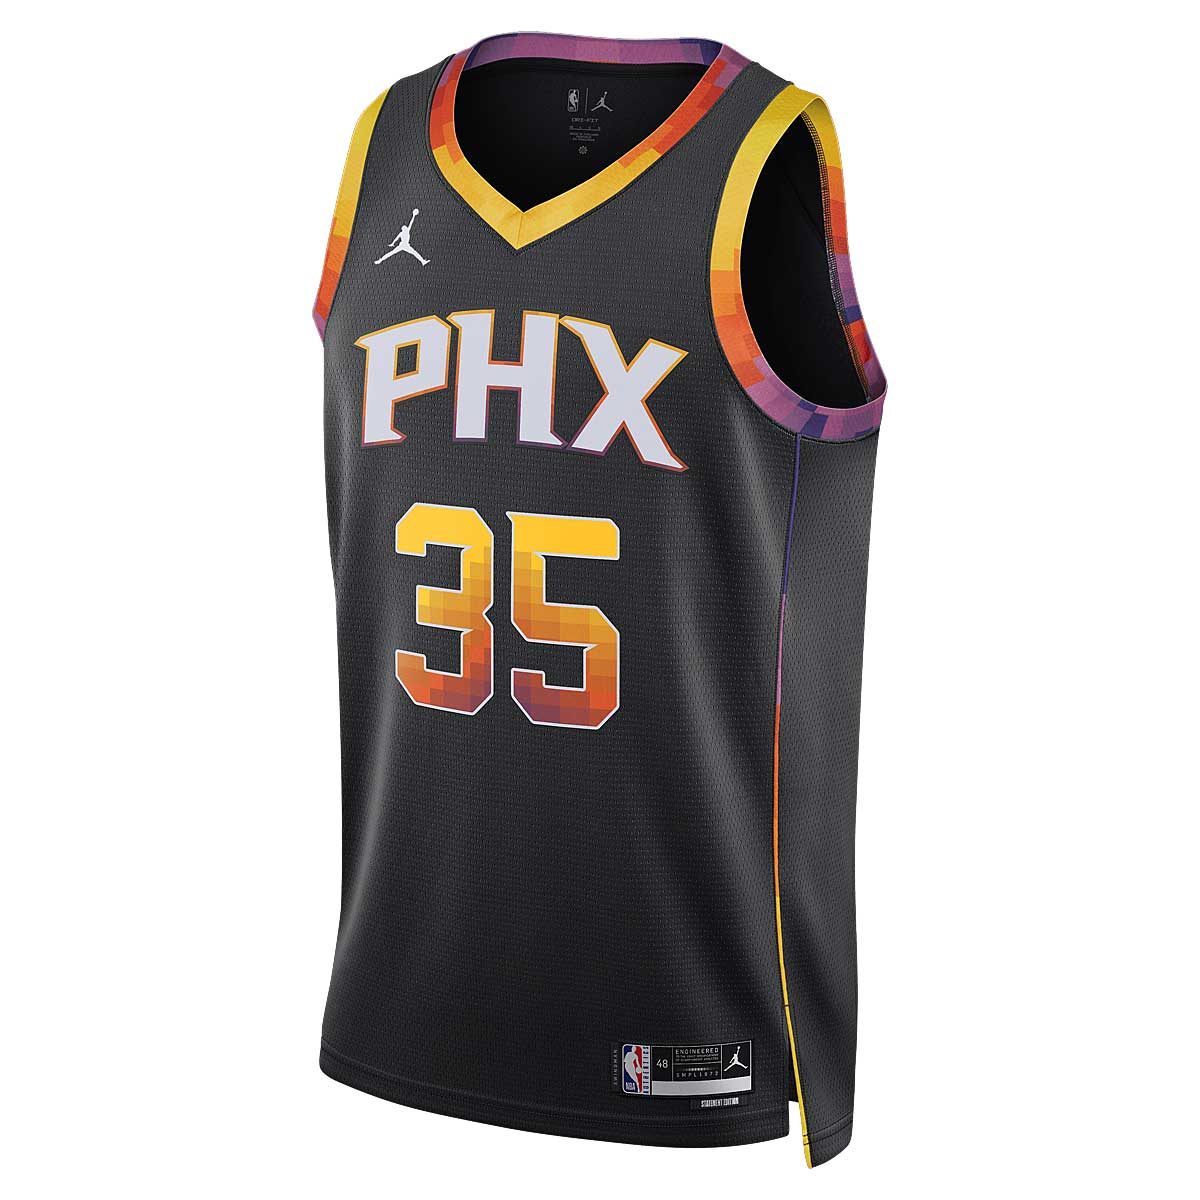 USA Basketball *Durant* Nike Shirt XL XL